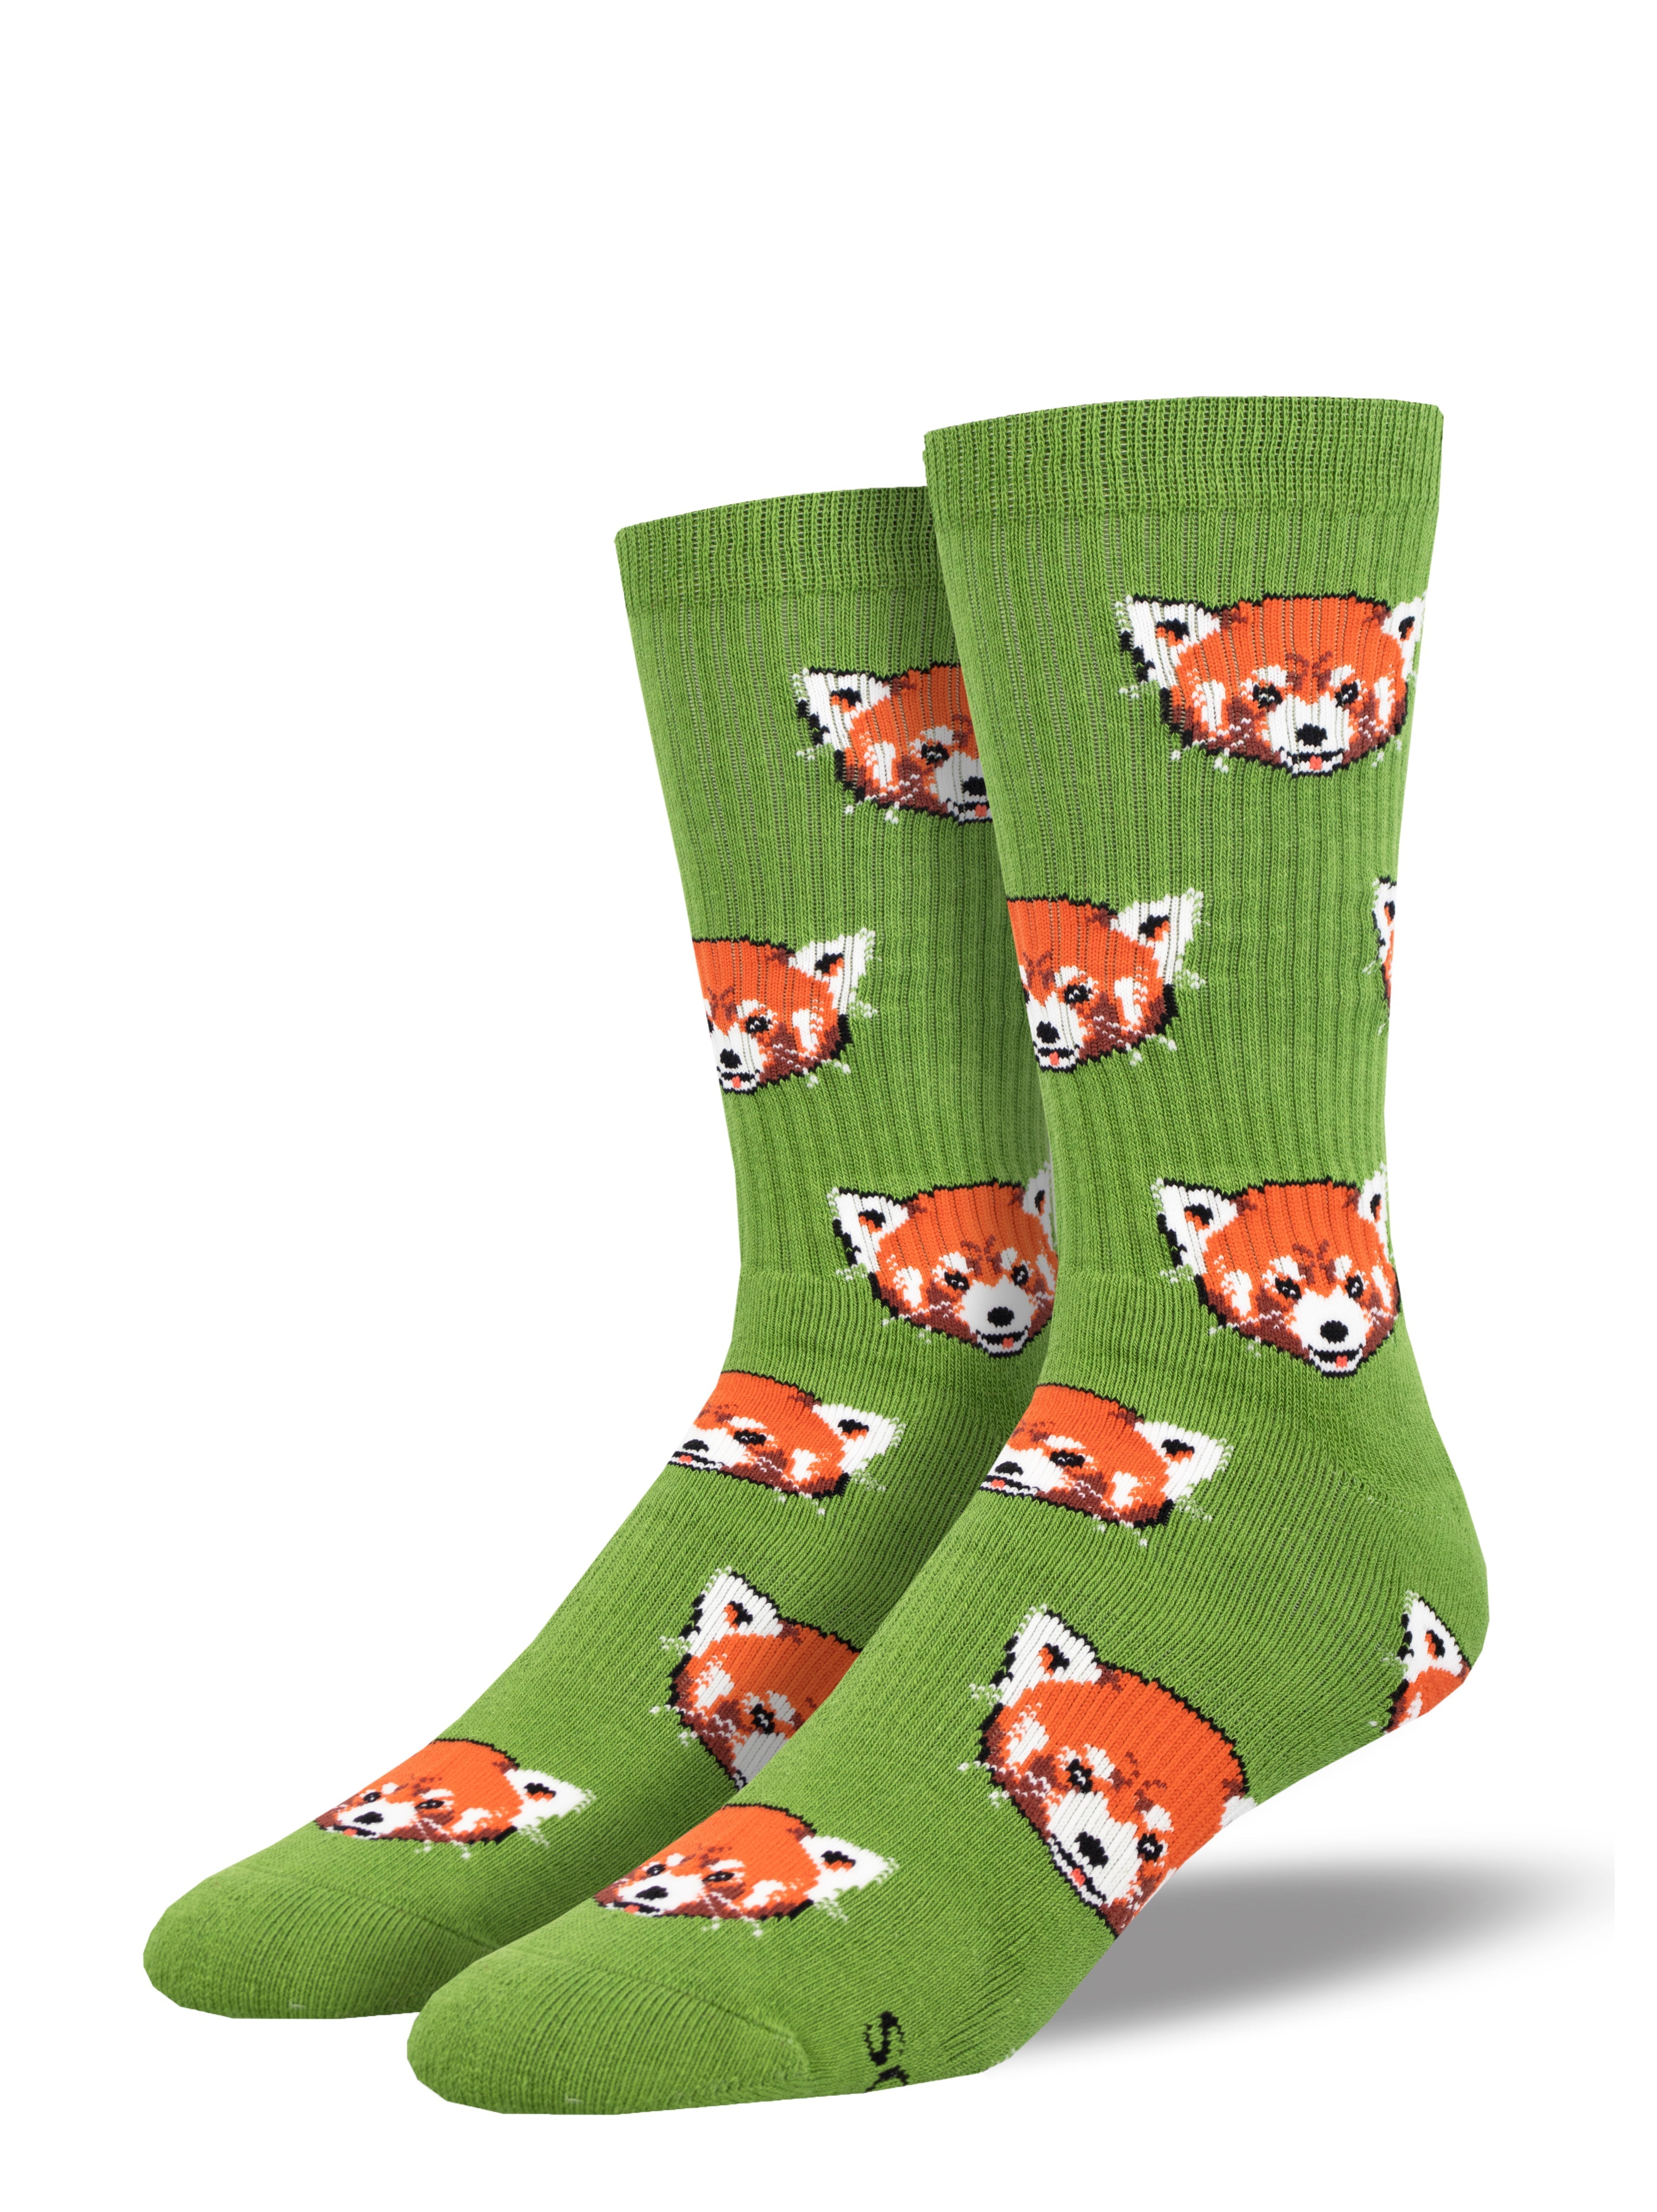 Athletic Novelty Crew "Red Panda" Socks